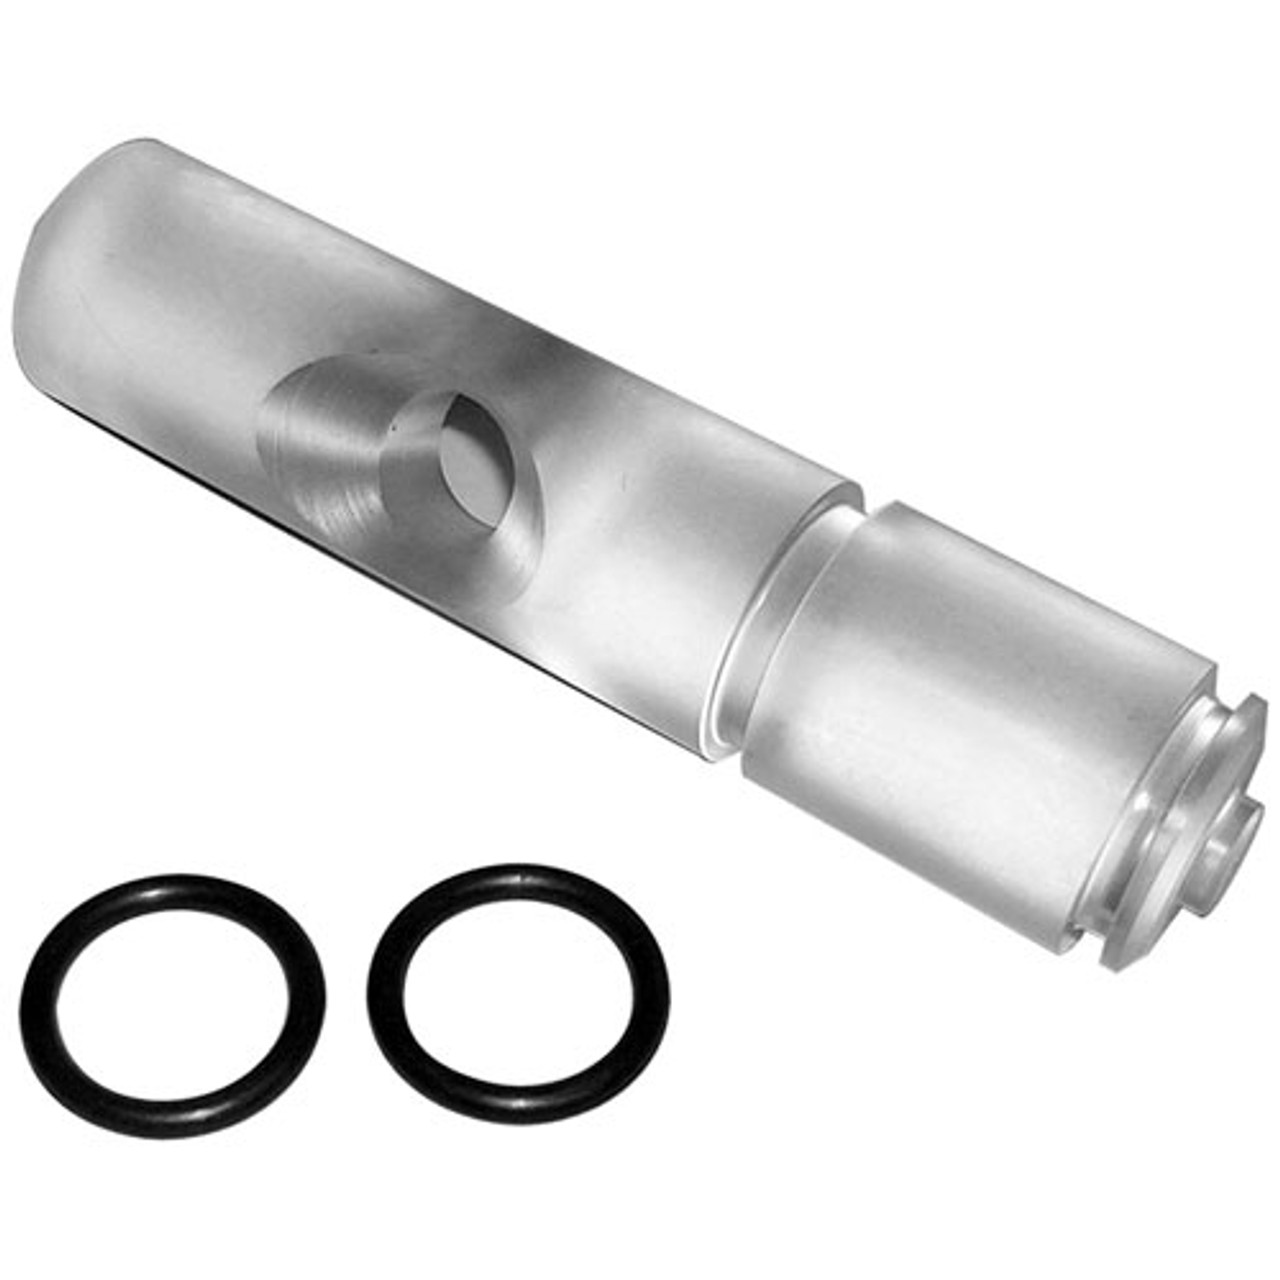 Spigot Plunger Kit - Replacement Part For Saniserv 105503